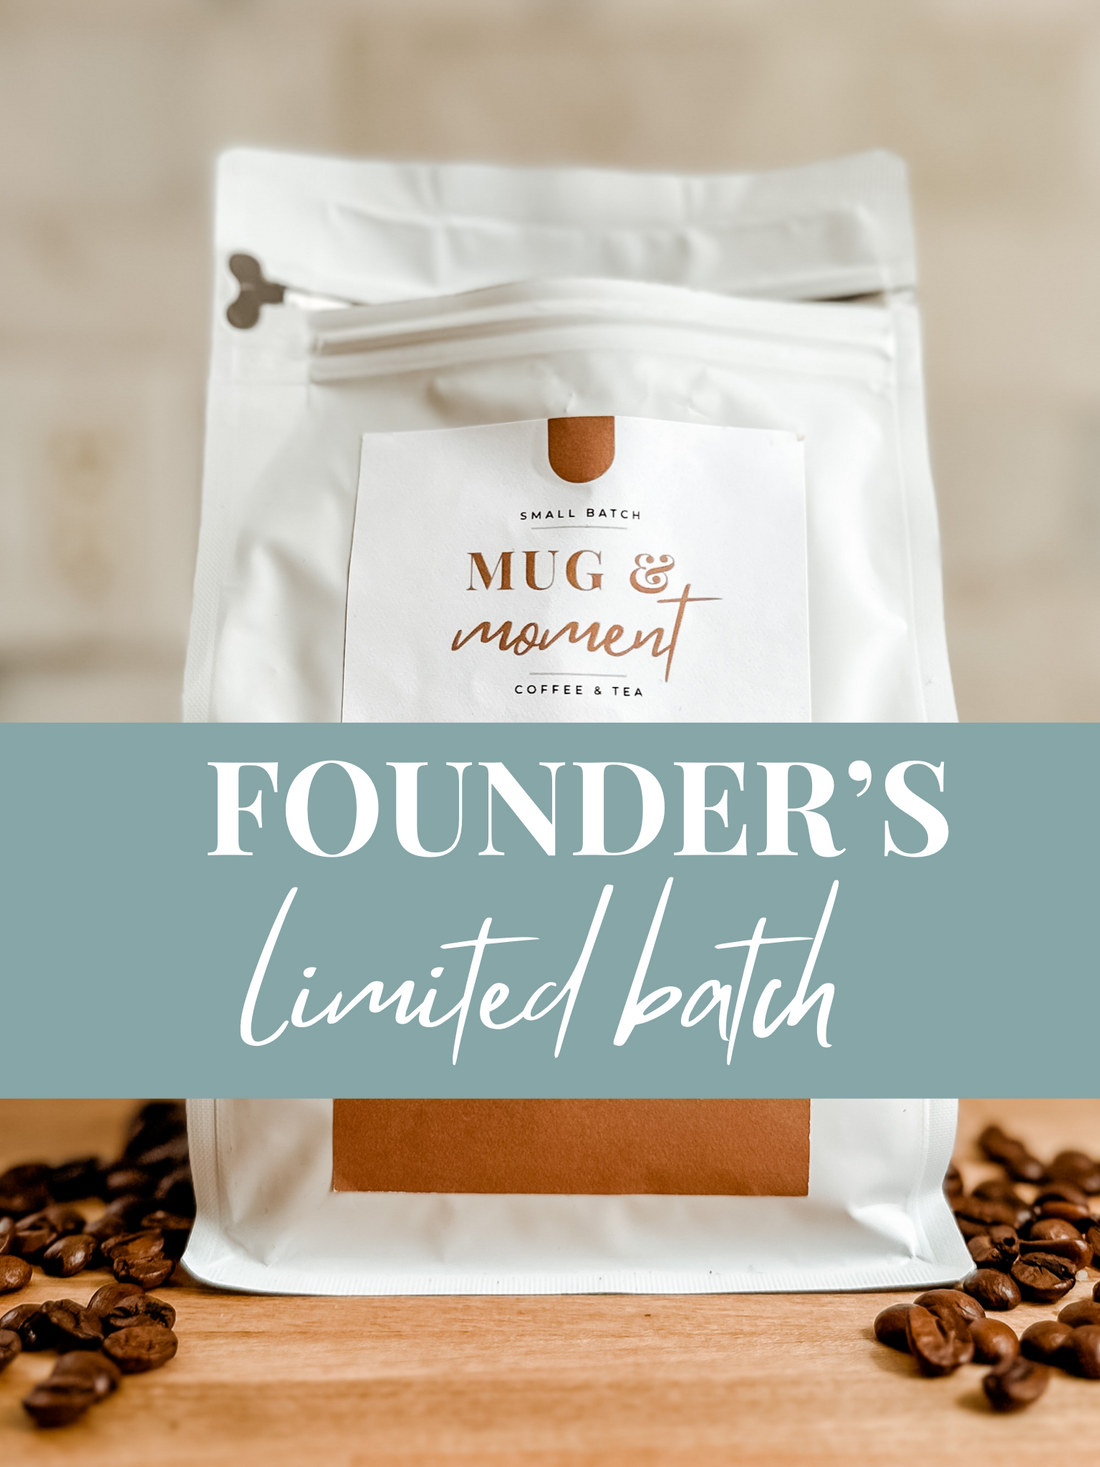 Founder’s Limited Batch - Mug & Moment Coffee